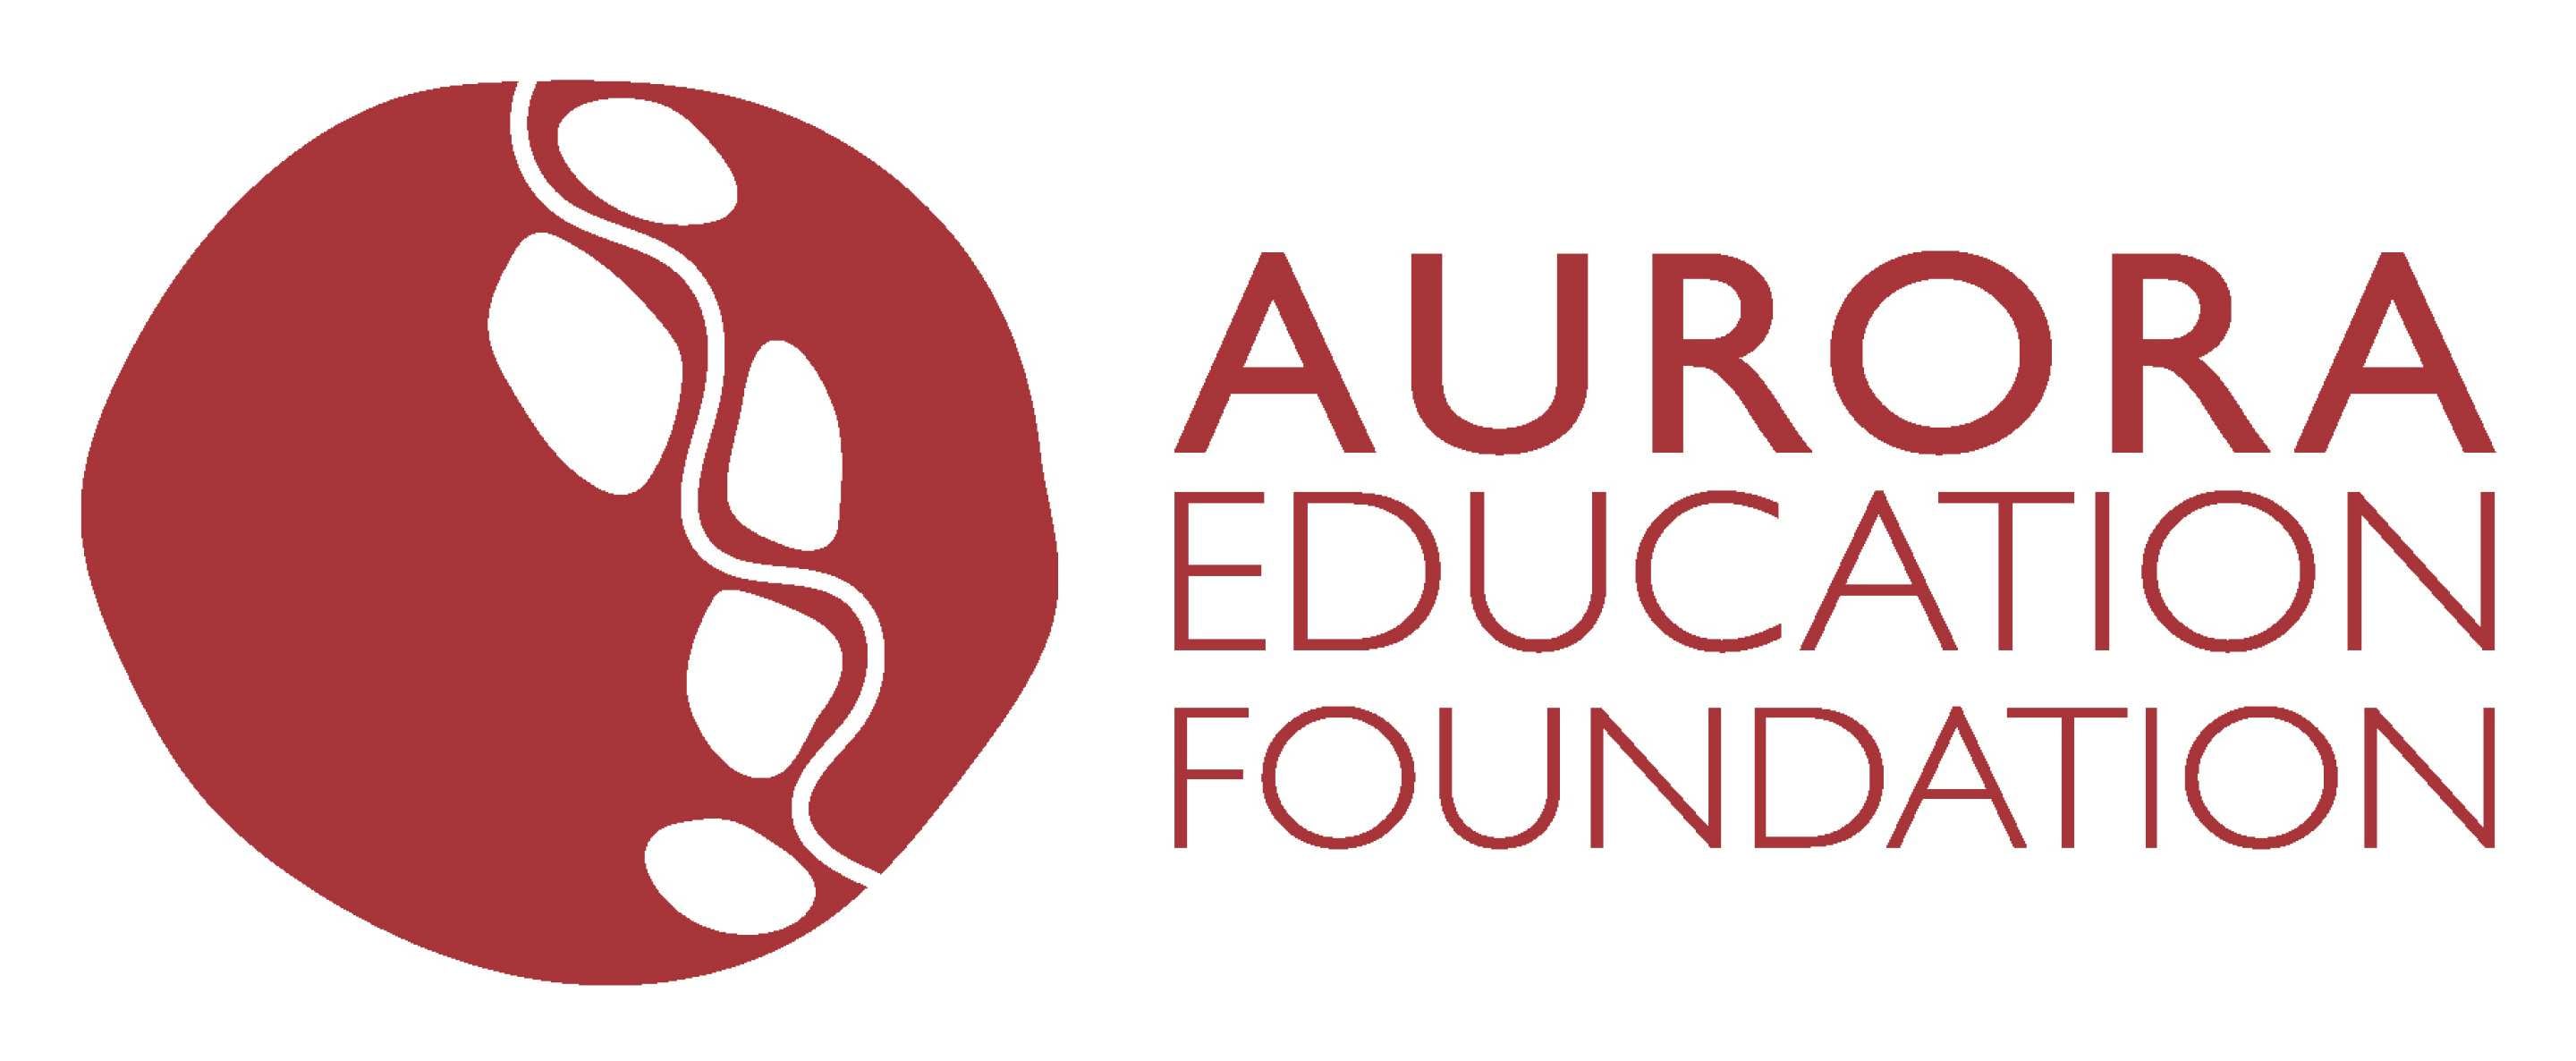 Aurora Education Foundation